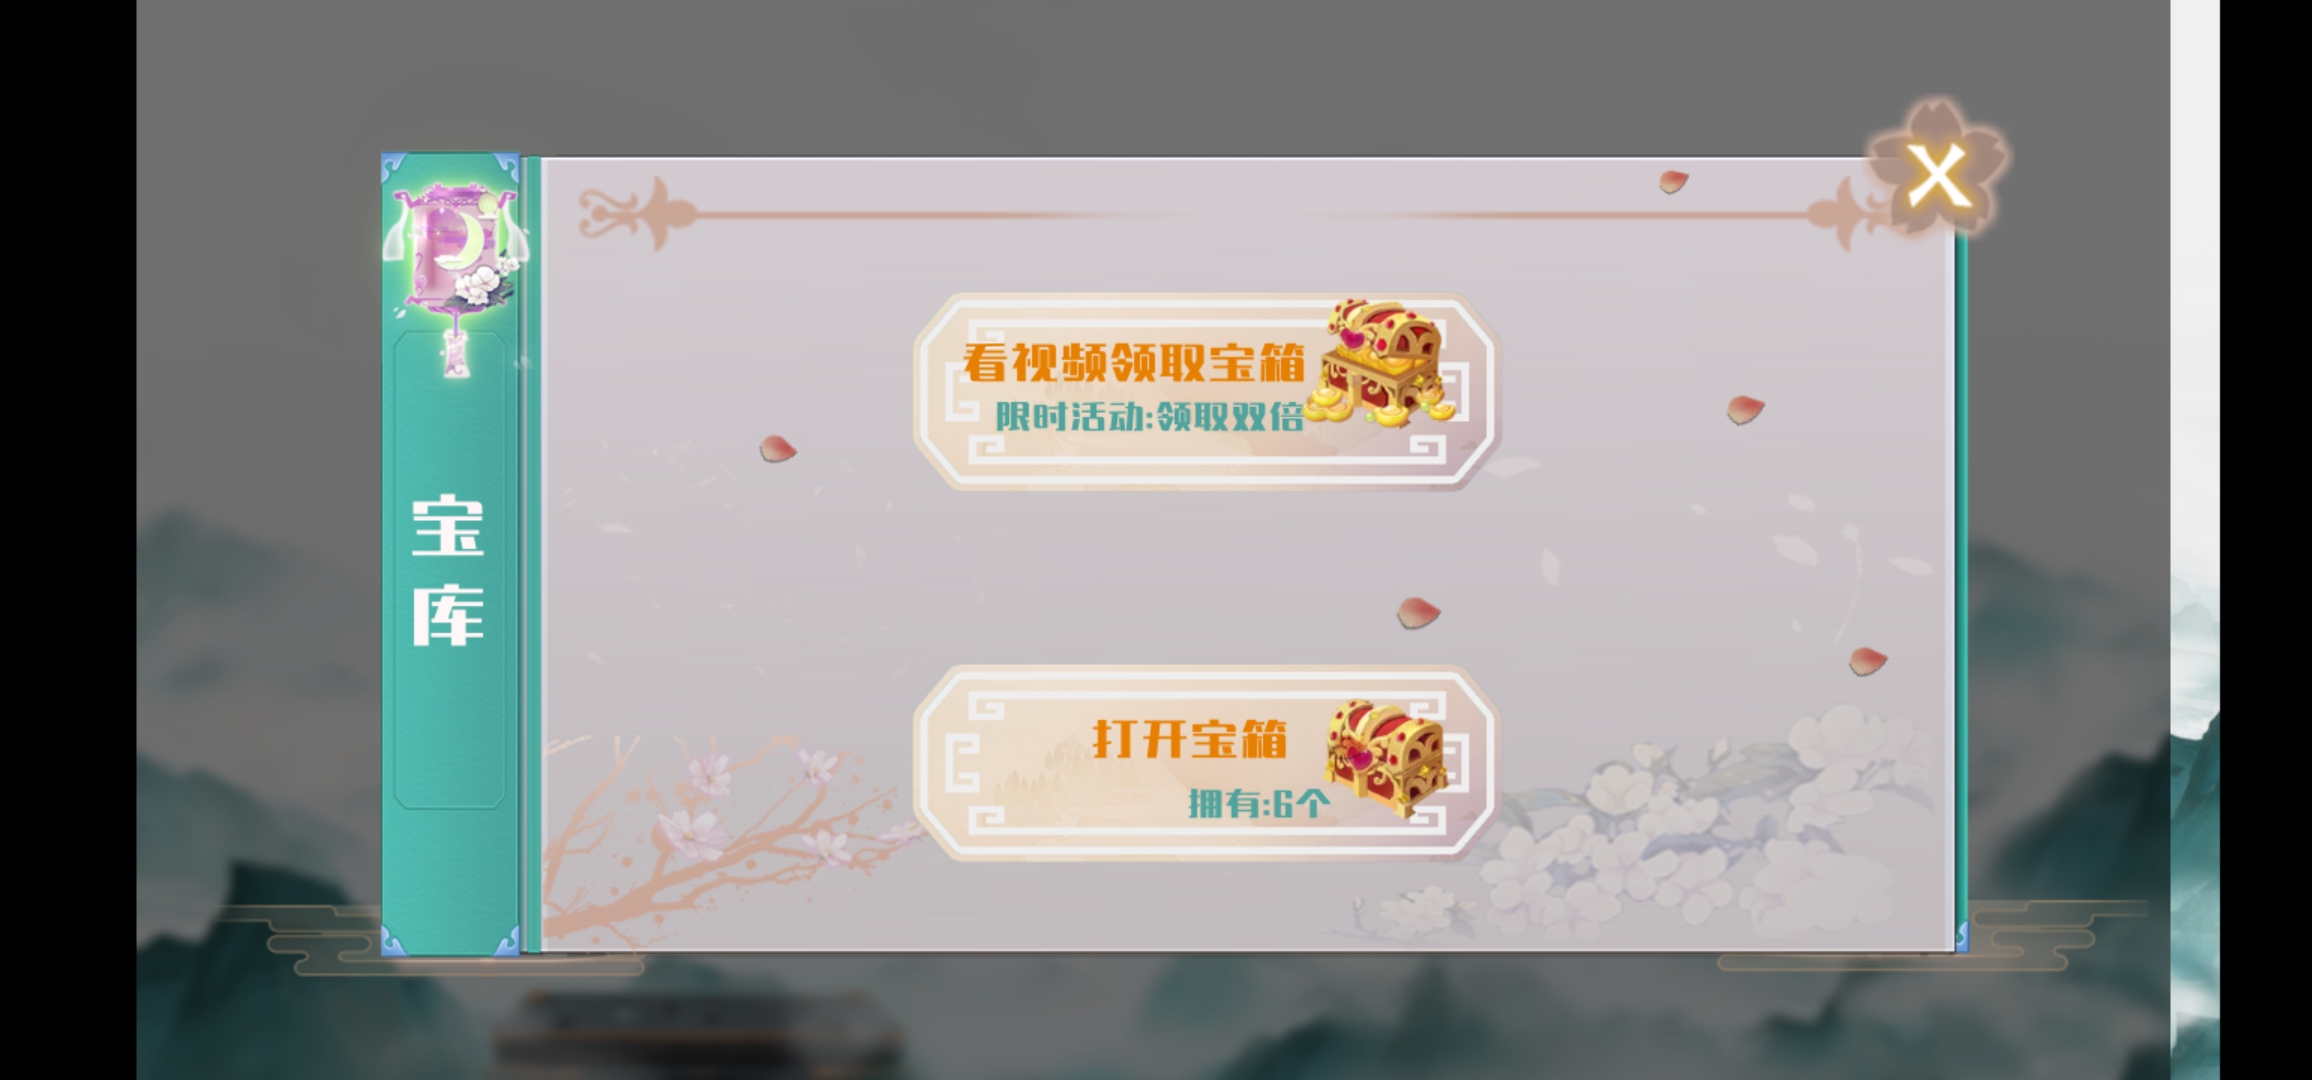 天元五子棋(no watching ads to get Rewards)